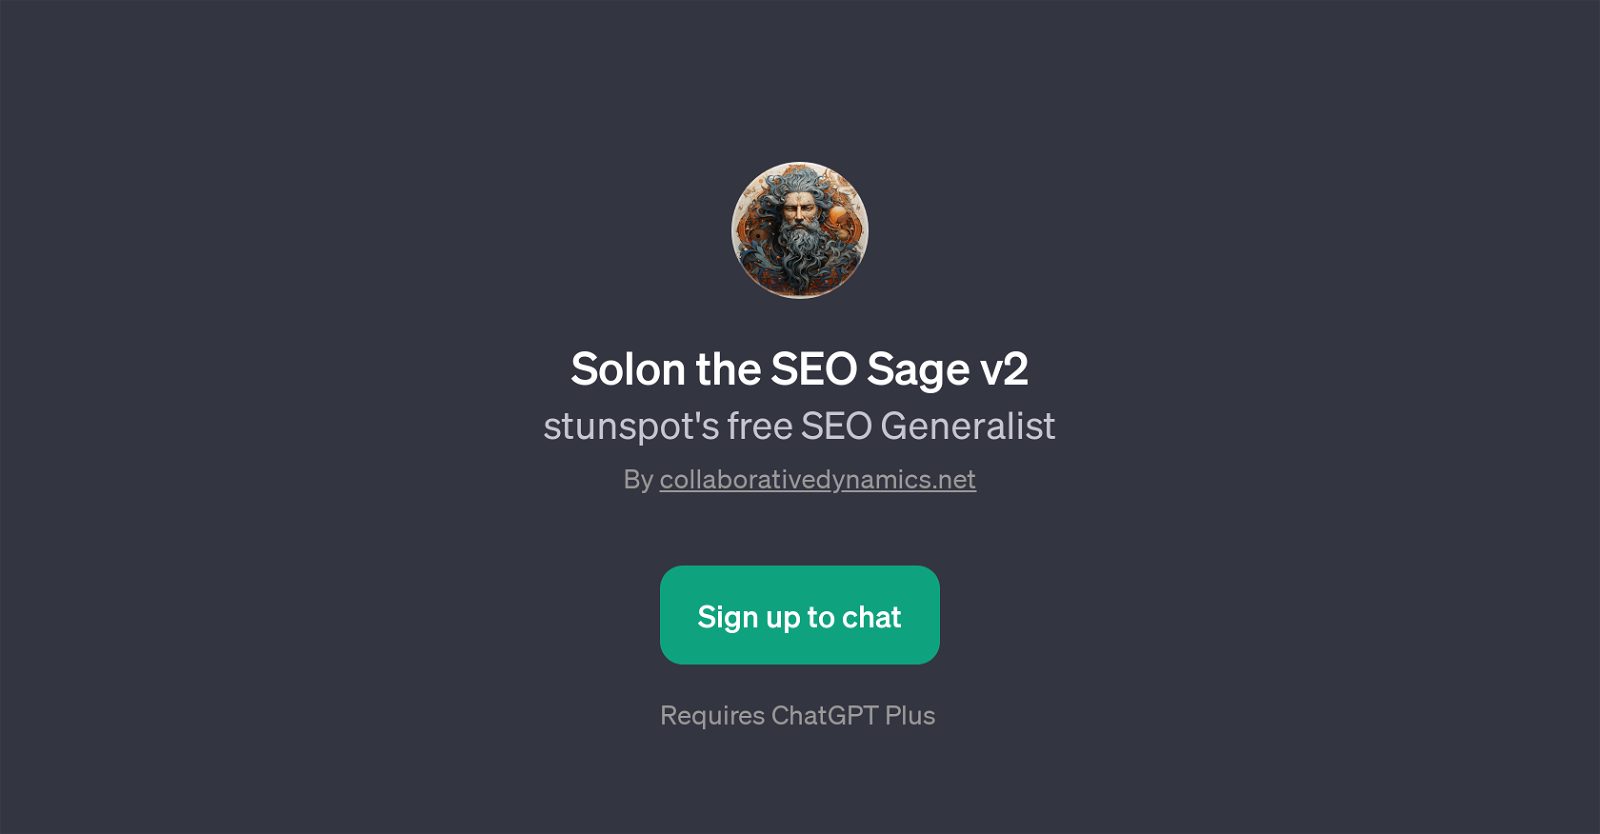 Solon the SEO Sage v2 website